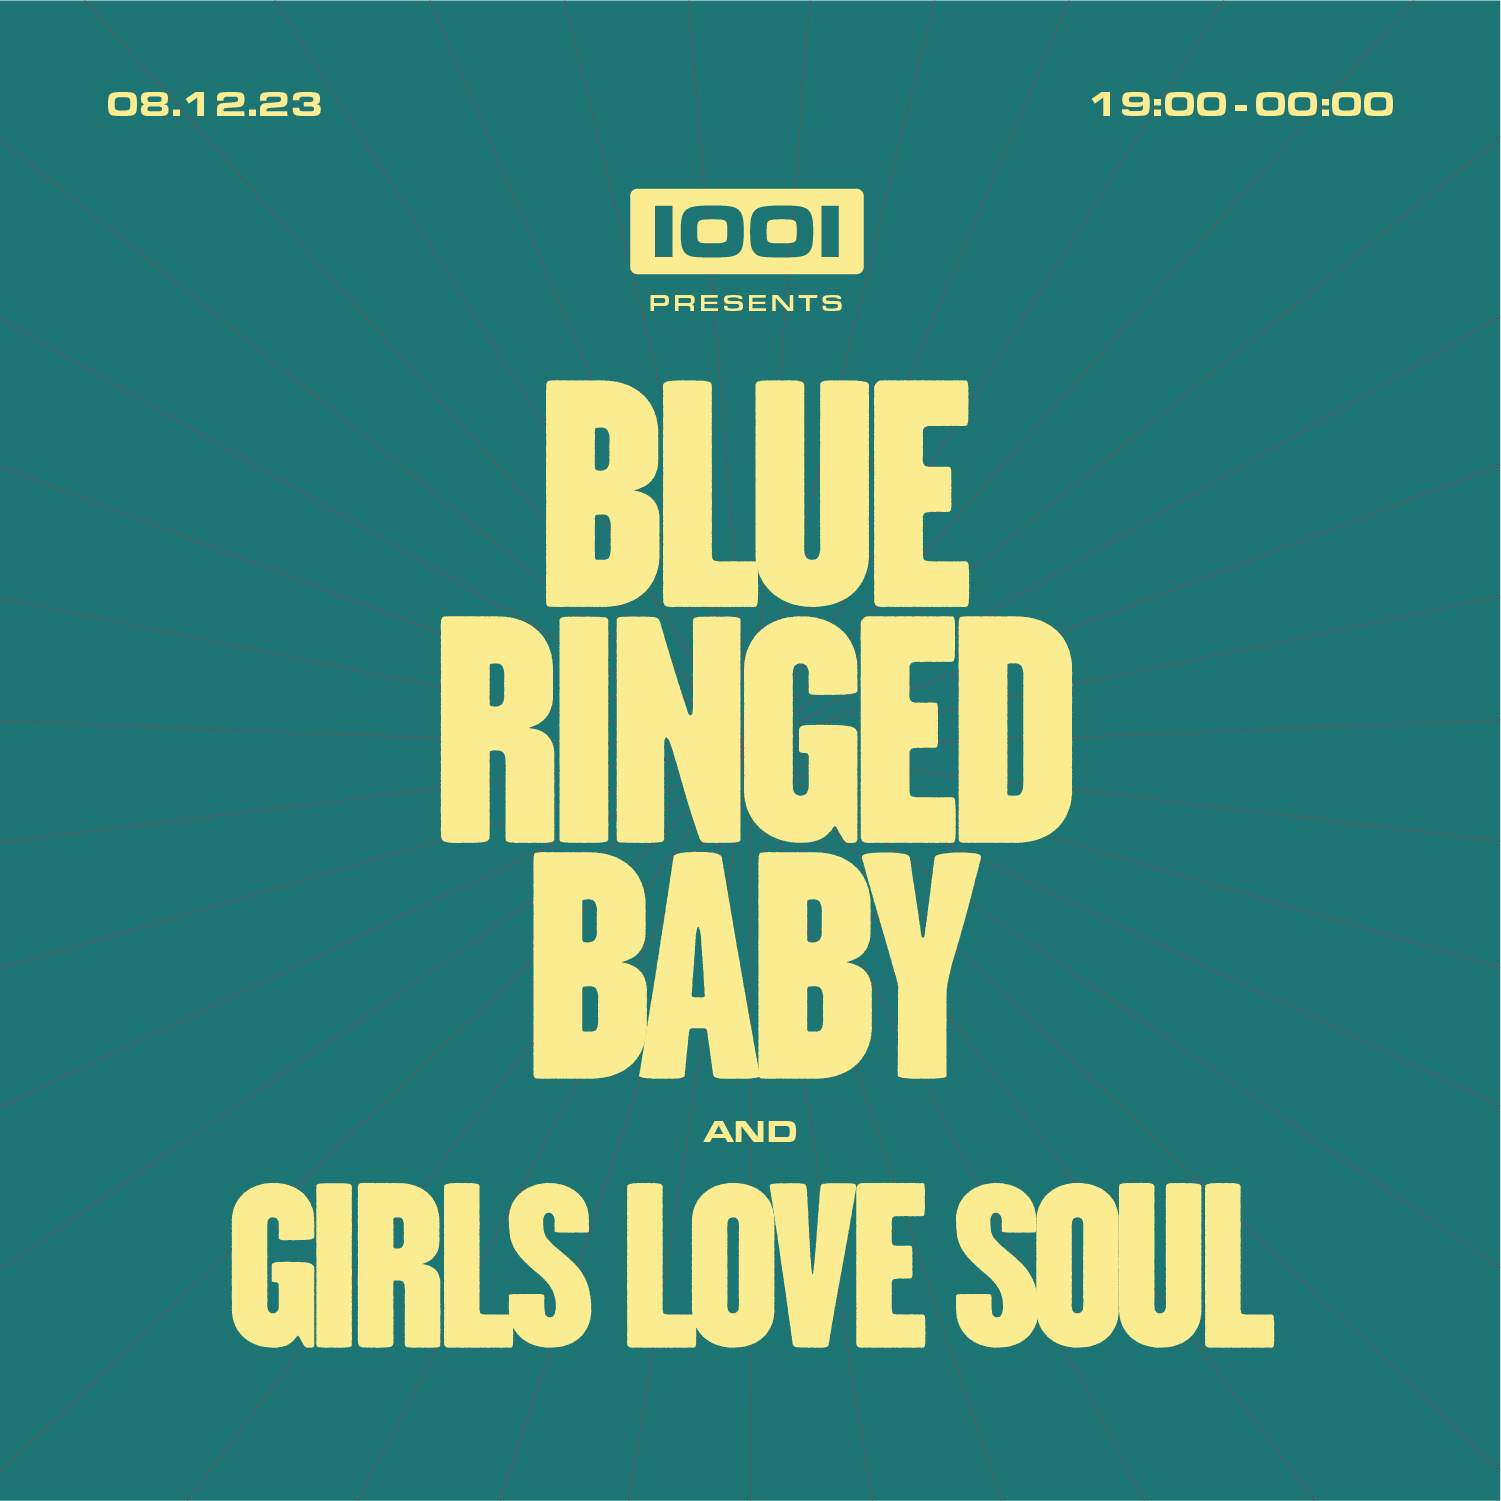 1001 presents Blue Ringed Baby & Girls Love Soul - Página trasera